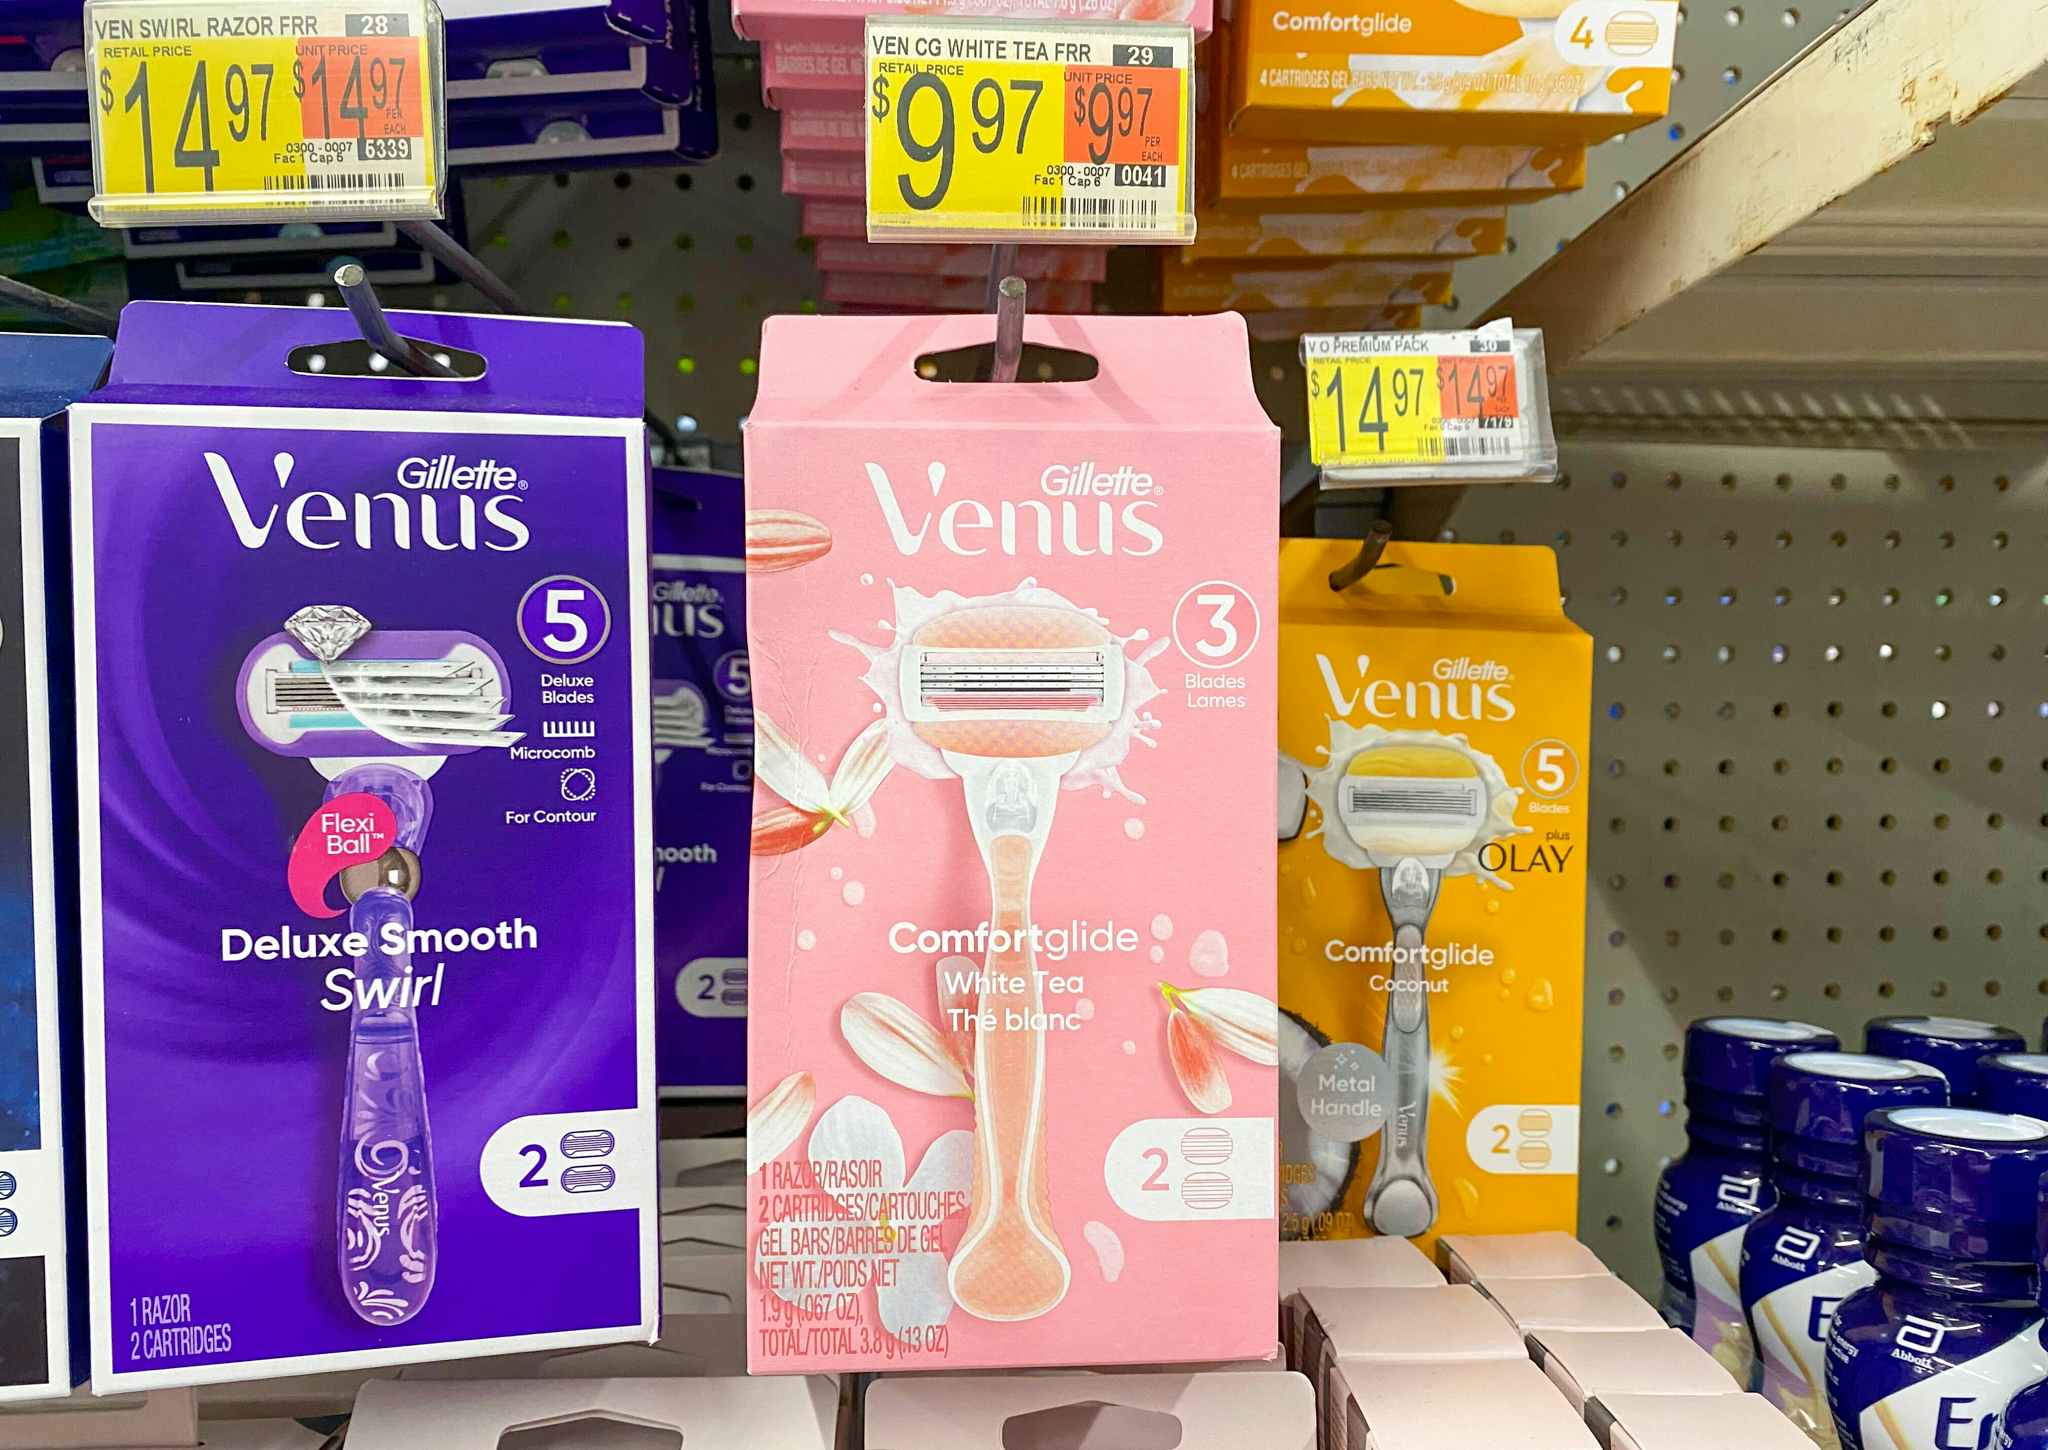 Venus Razors at Walmart